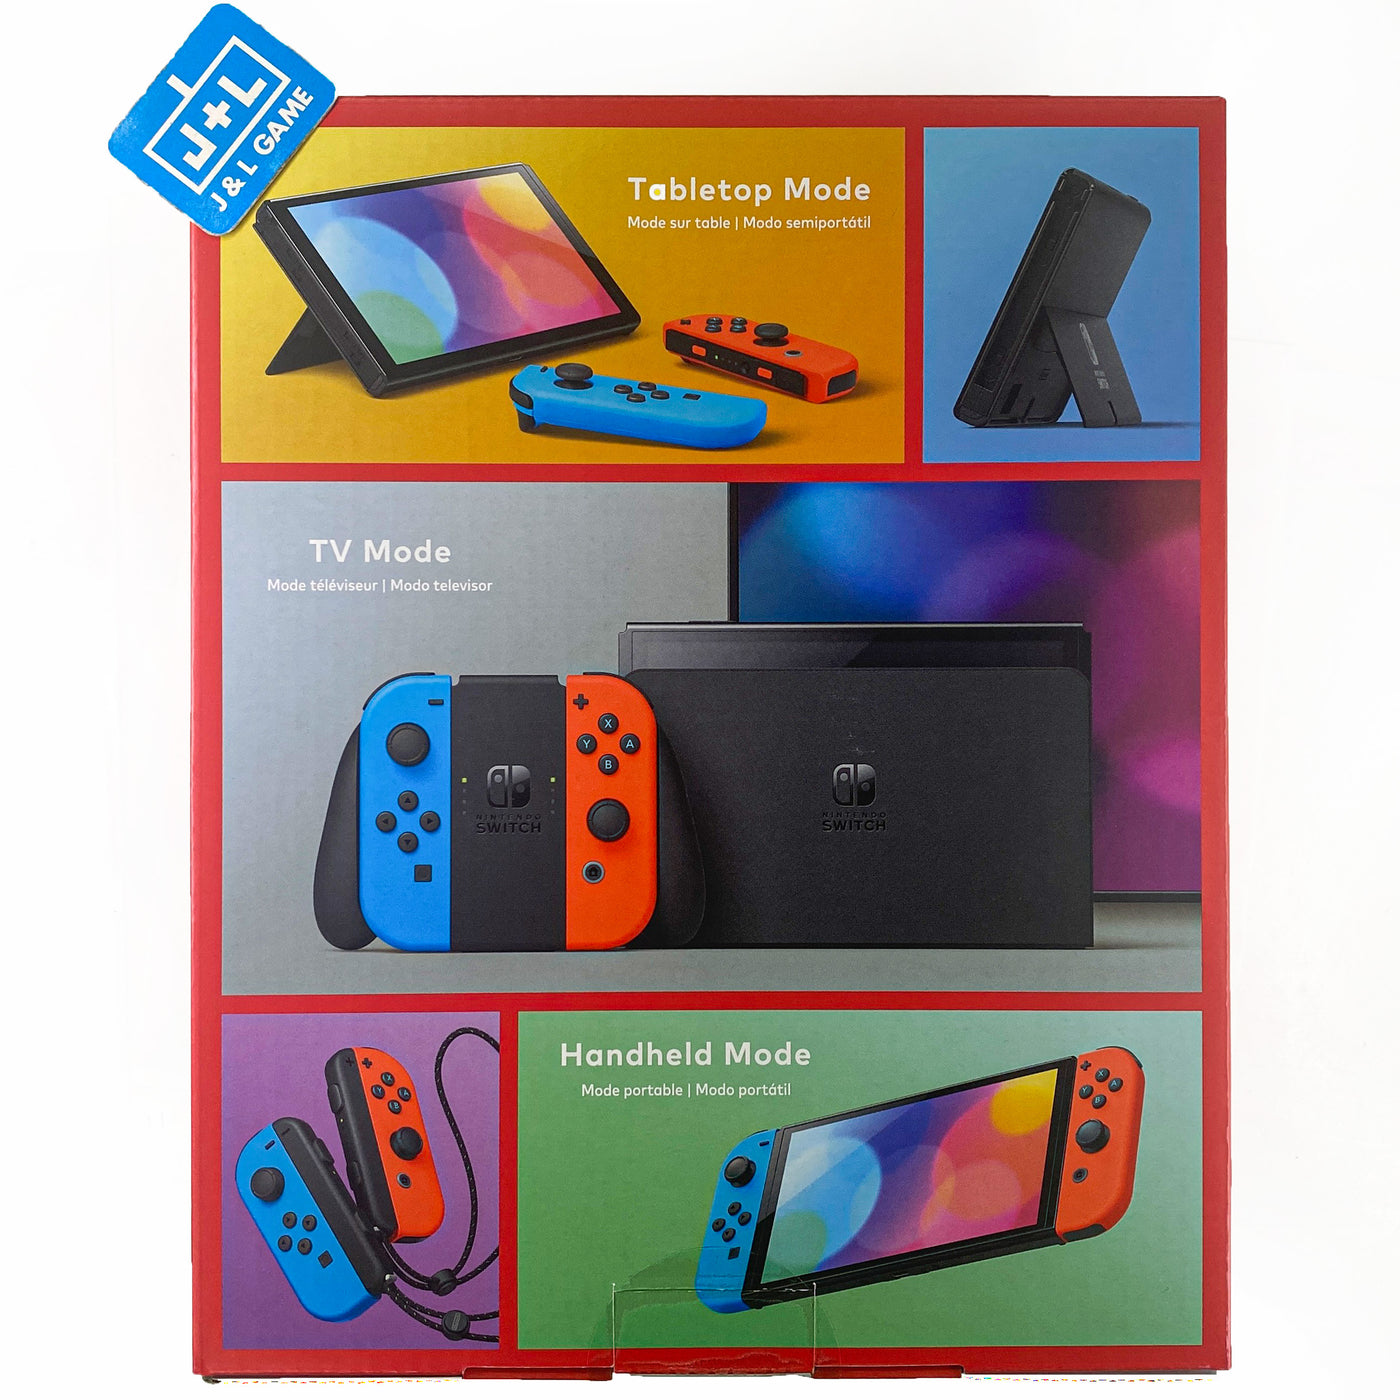 Nintendo - Switch OLED Model w/ Neon Red & Neon Blue Joy-Con 